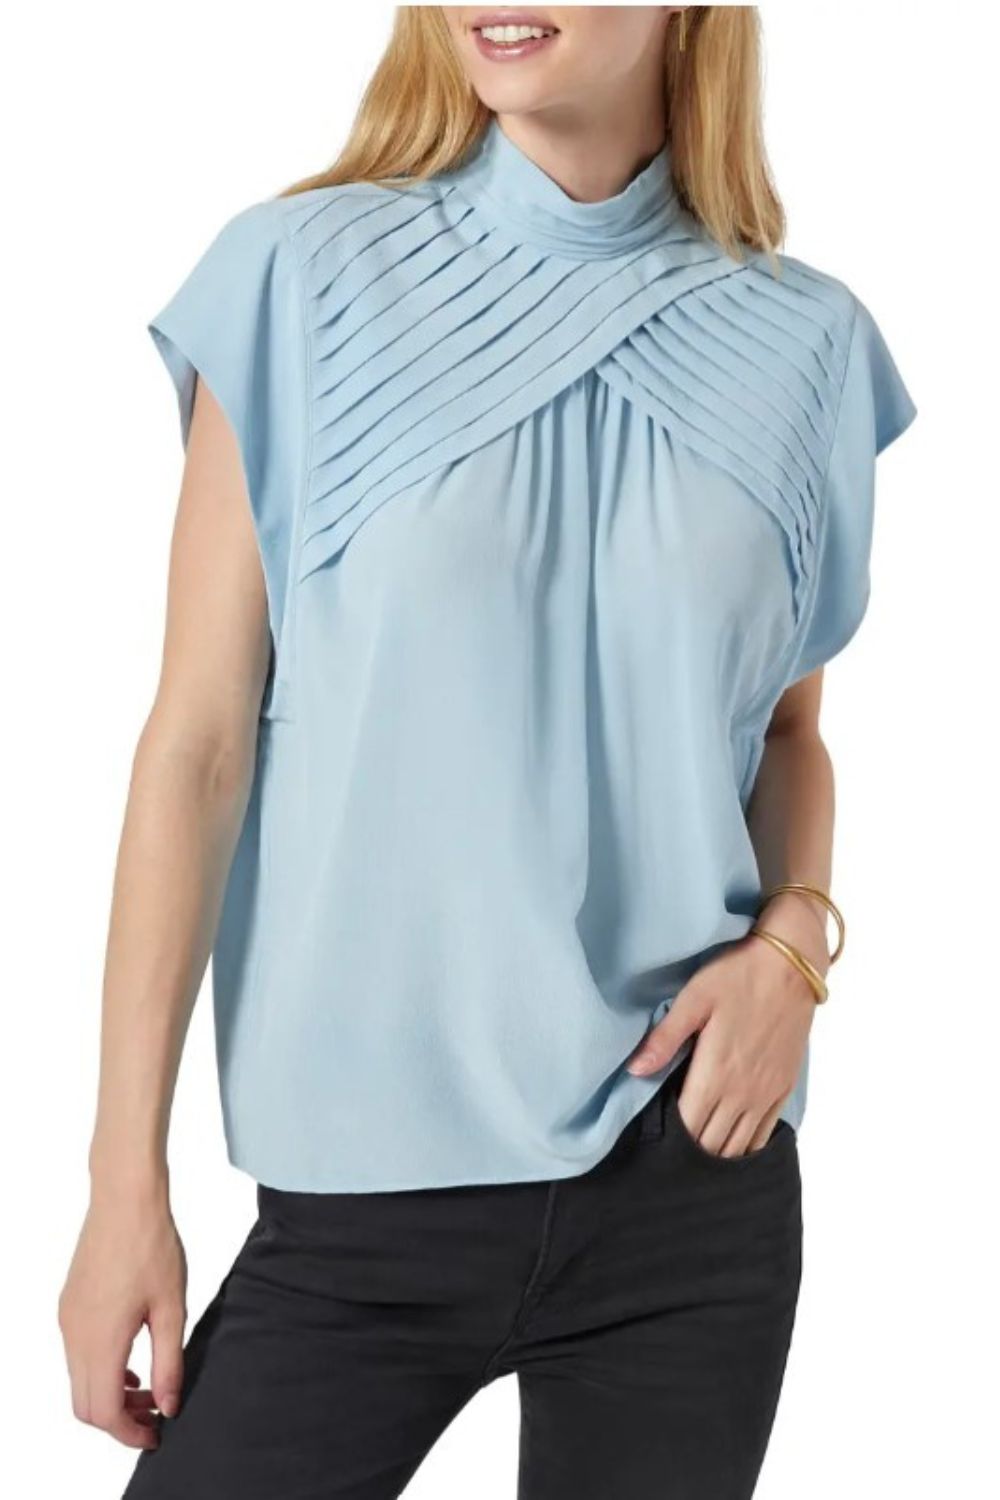 Joie Silk Shirt Womens Medium Blue Mock Neck Short Sleeve Edesse Pleated Top